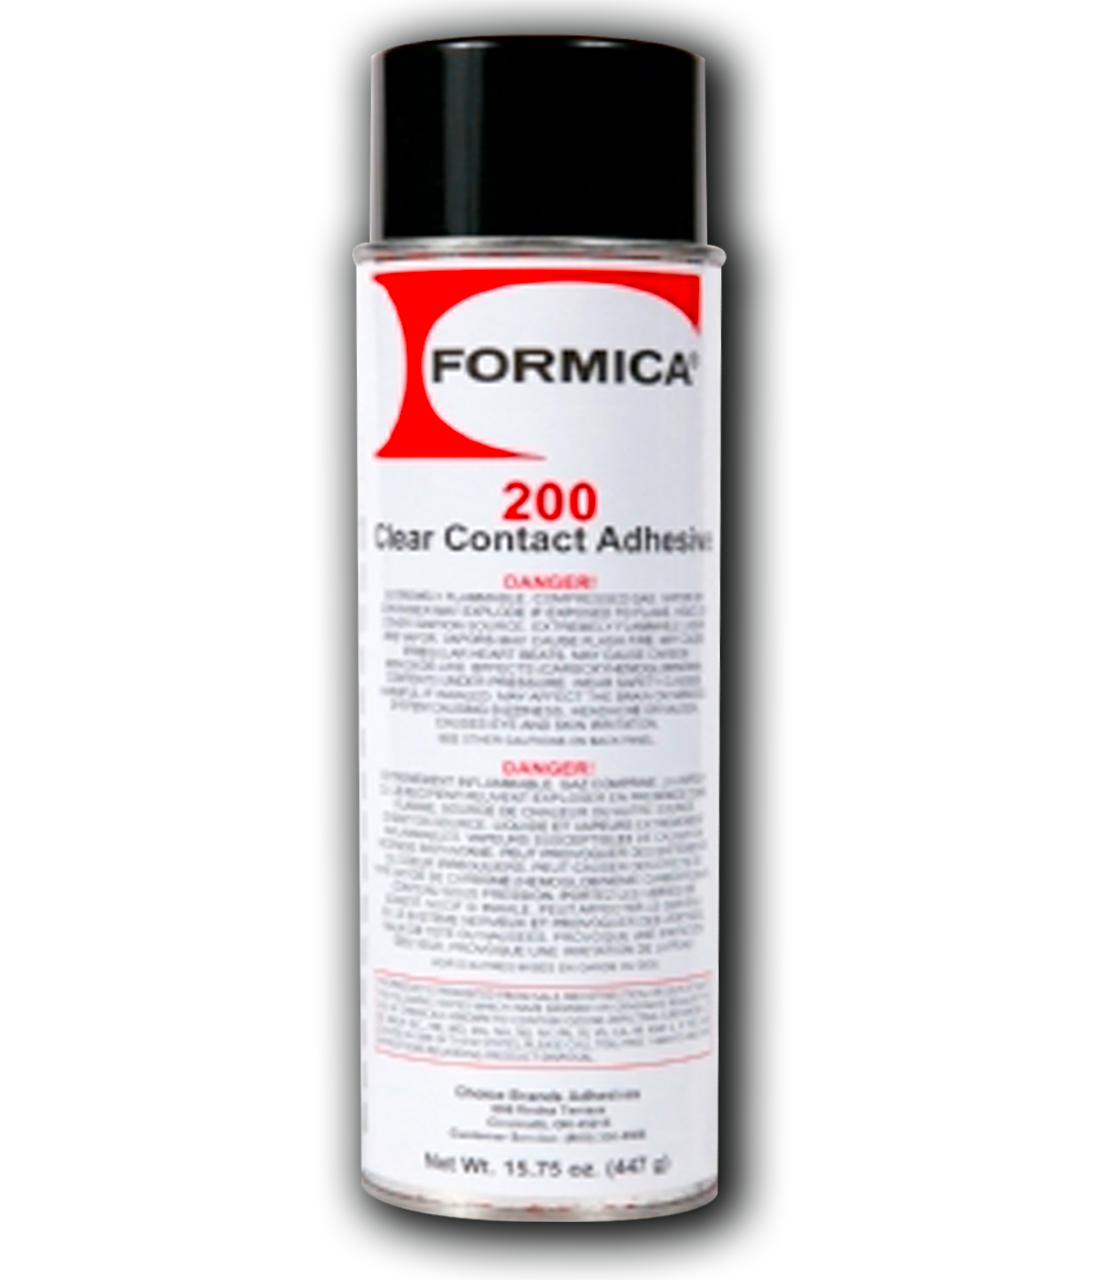 Glue for Formica Coastal Mosaic: Infinity Seam Smoke 523